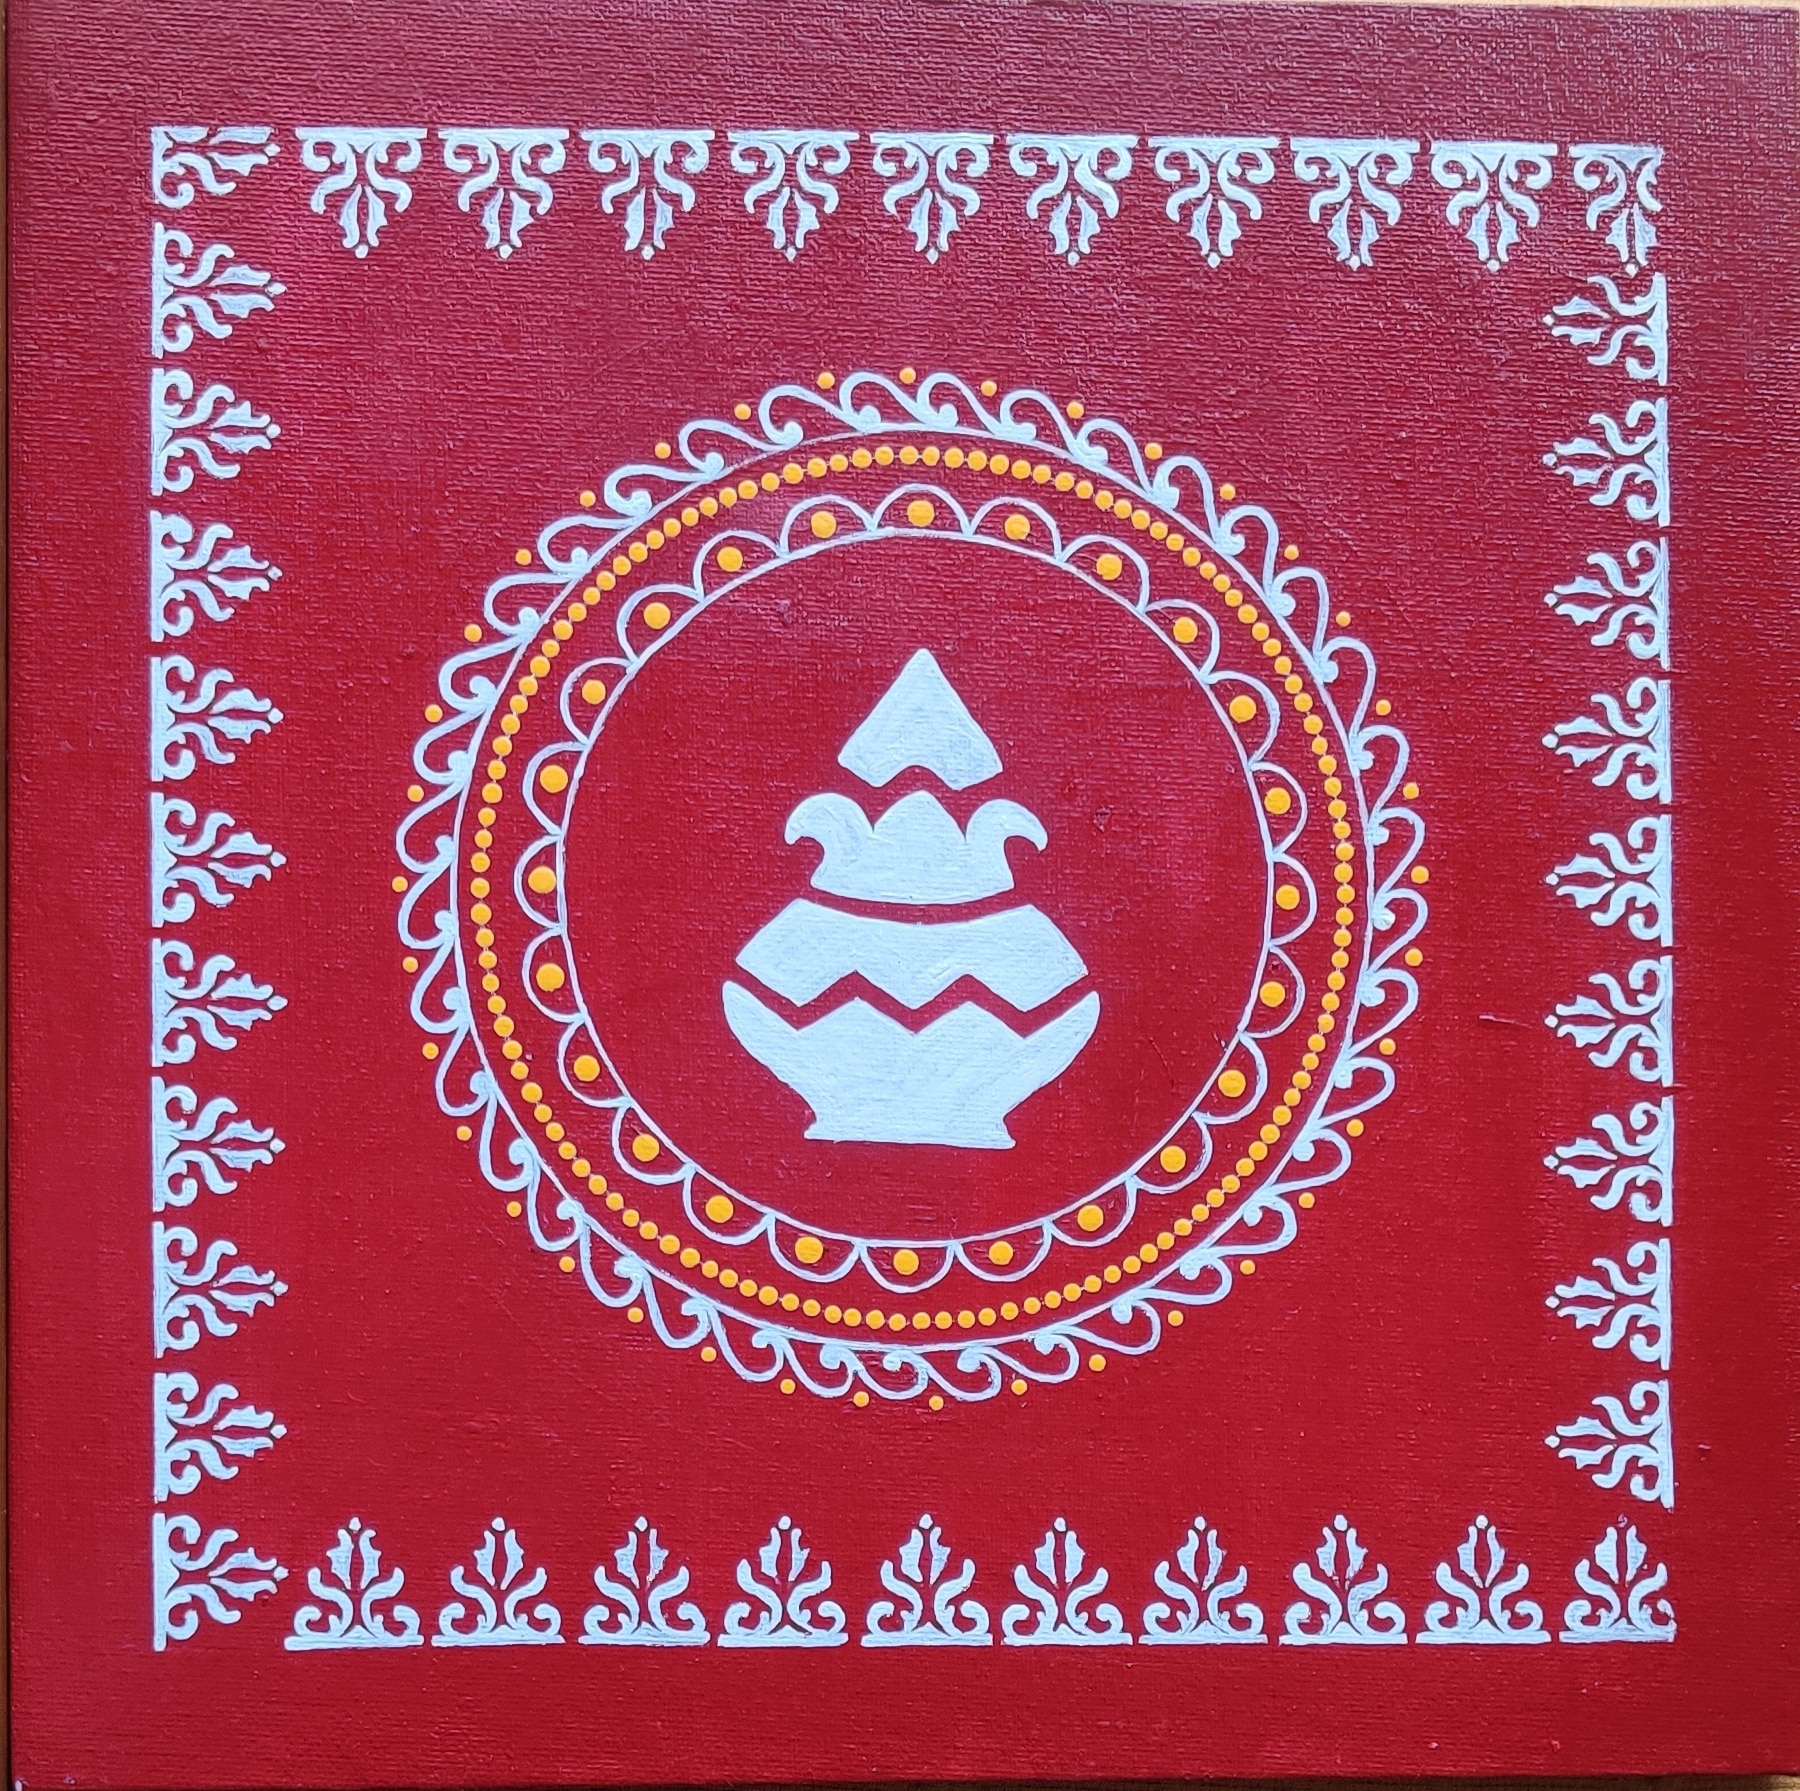 Special Diwali painting set of 4 - International Indian Folk Art Gallery